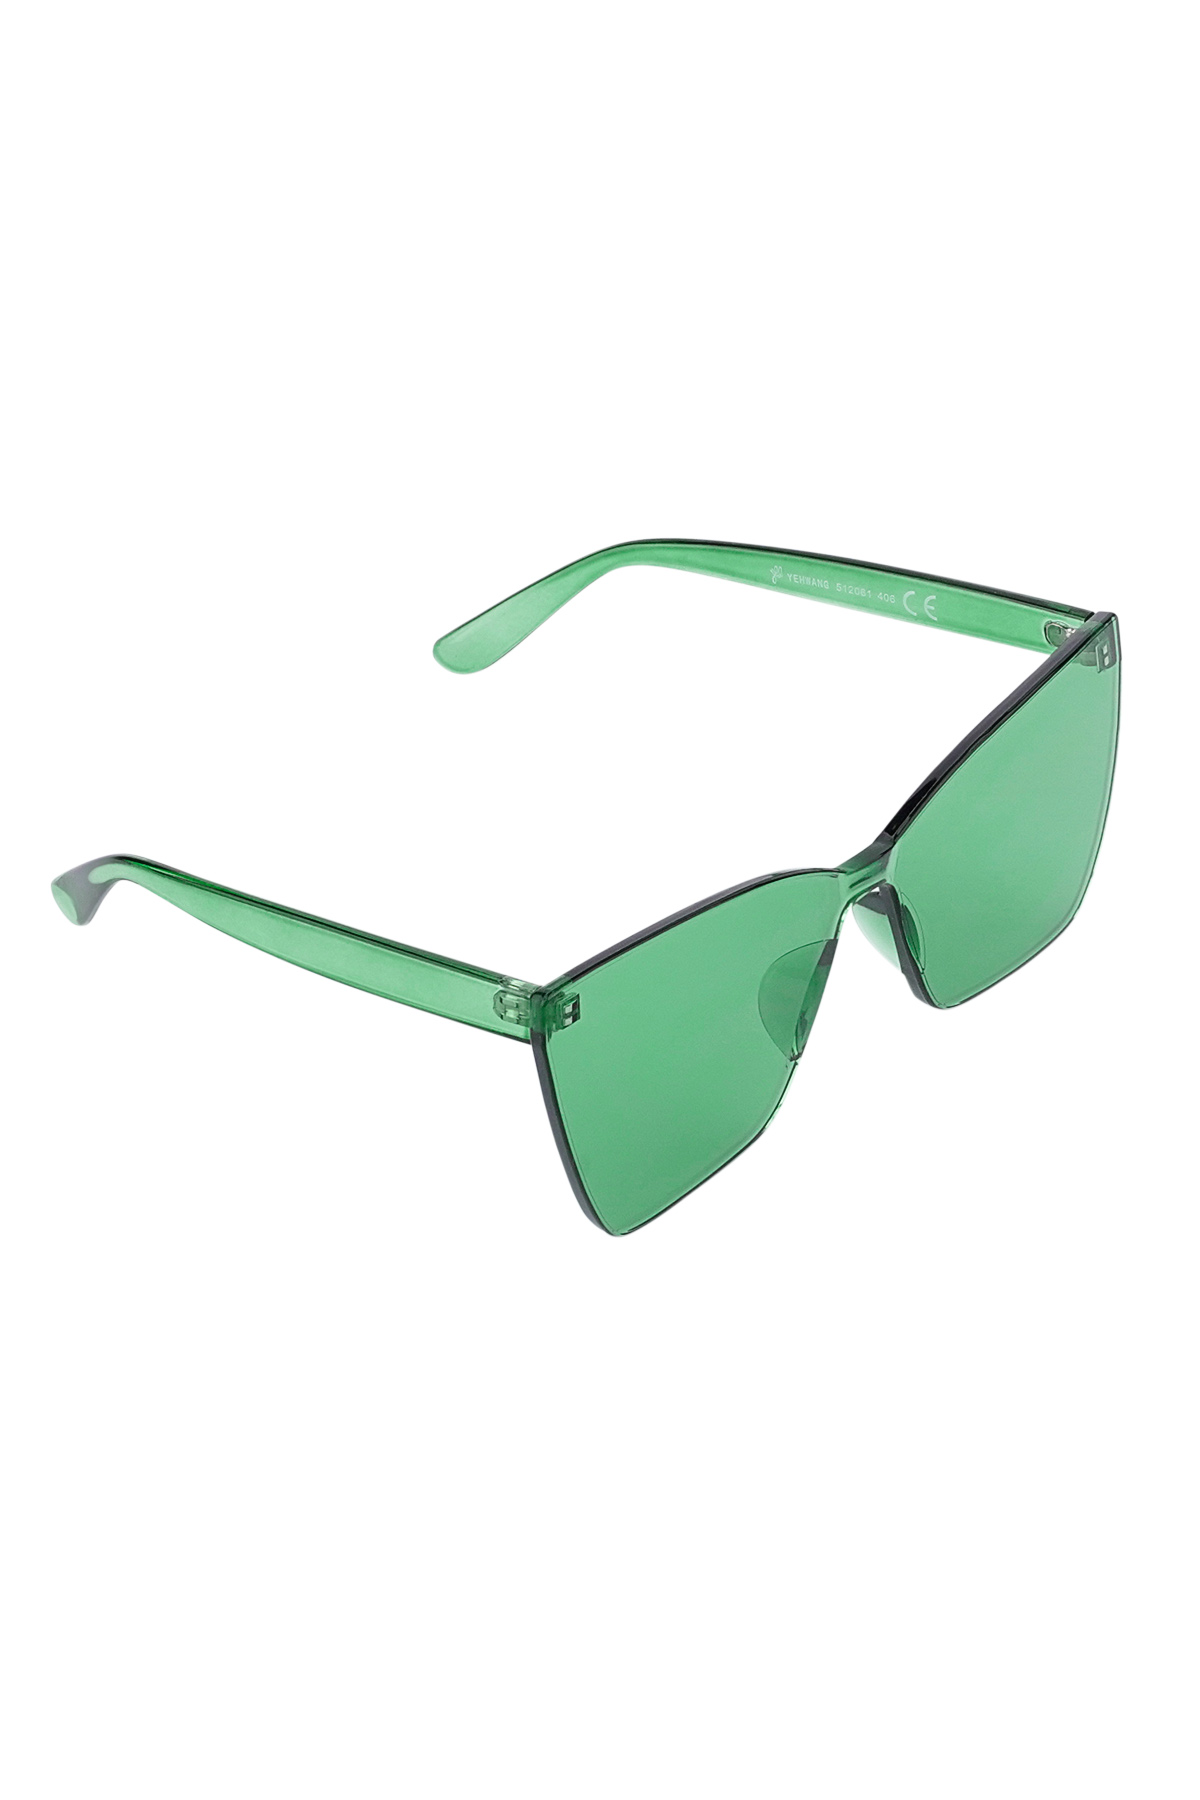 Single-color daily sunglasses - green